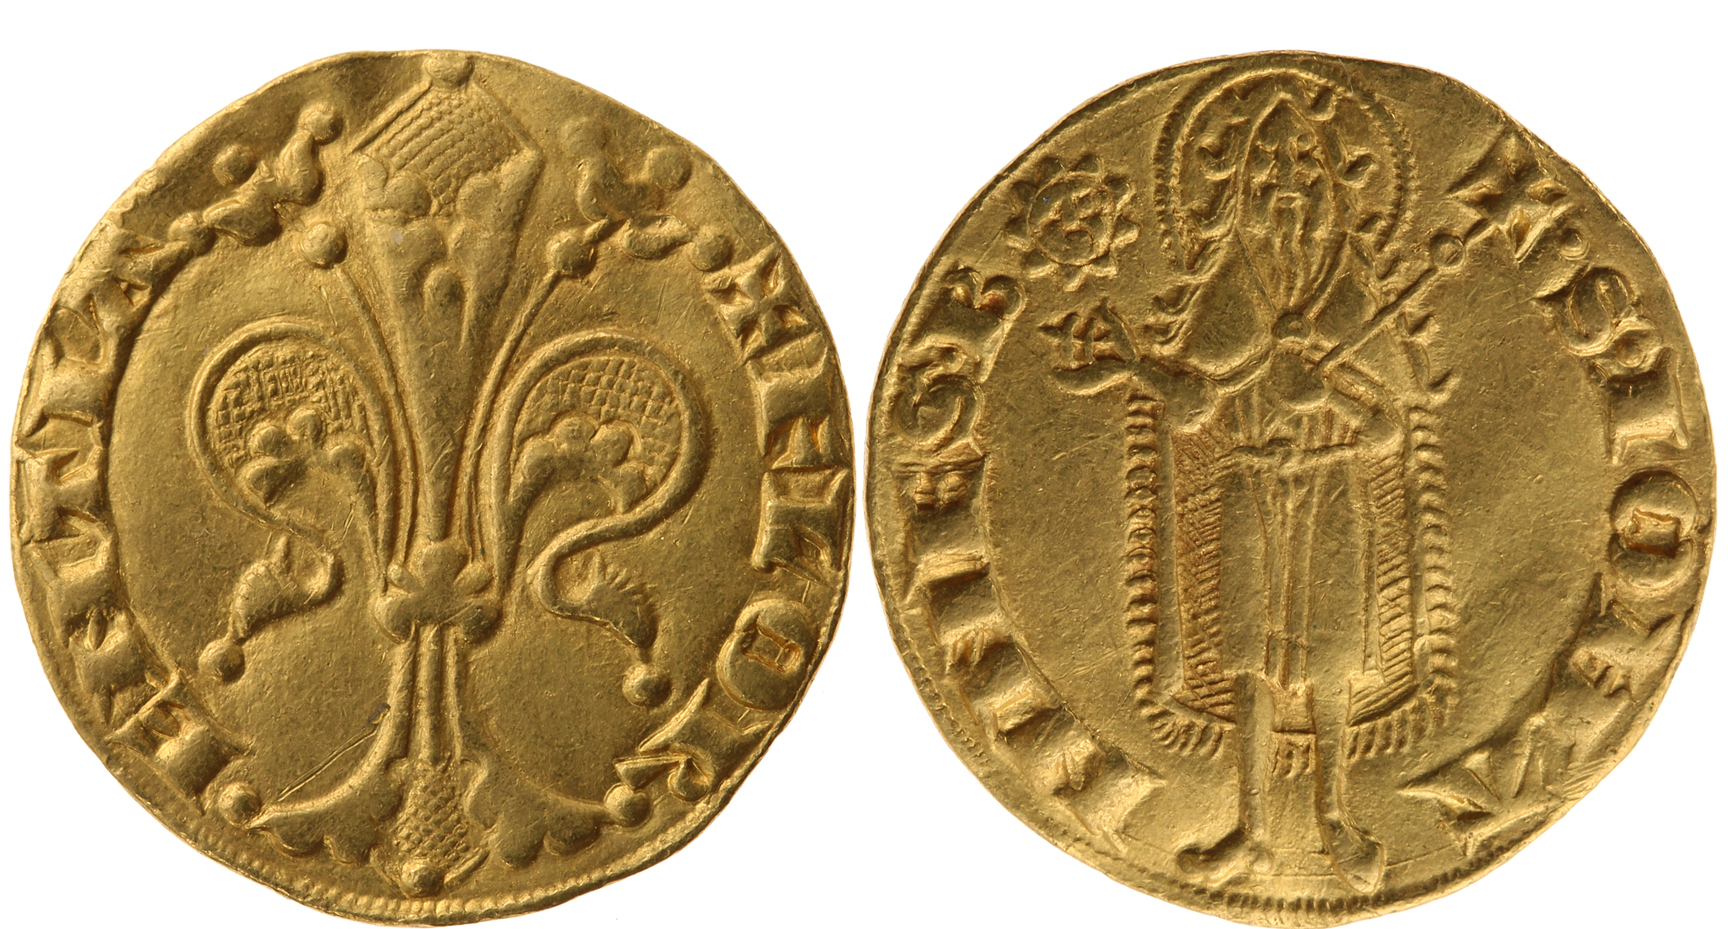 Gold florin of Florence ©Bundesbank